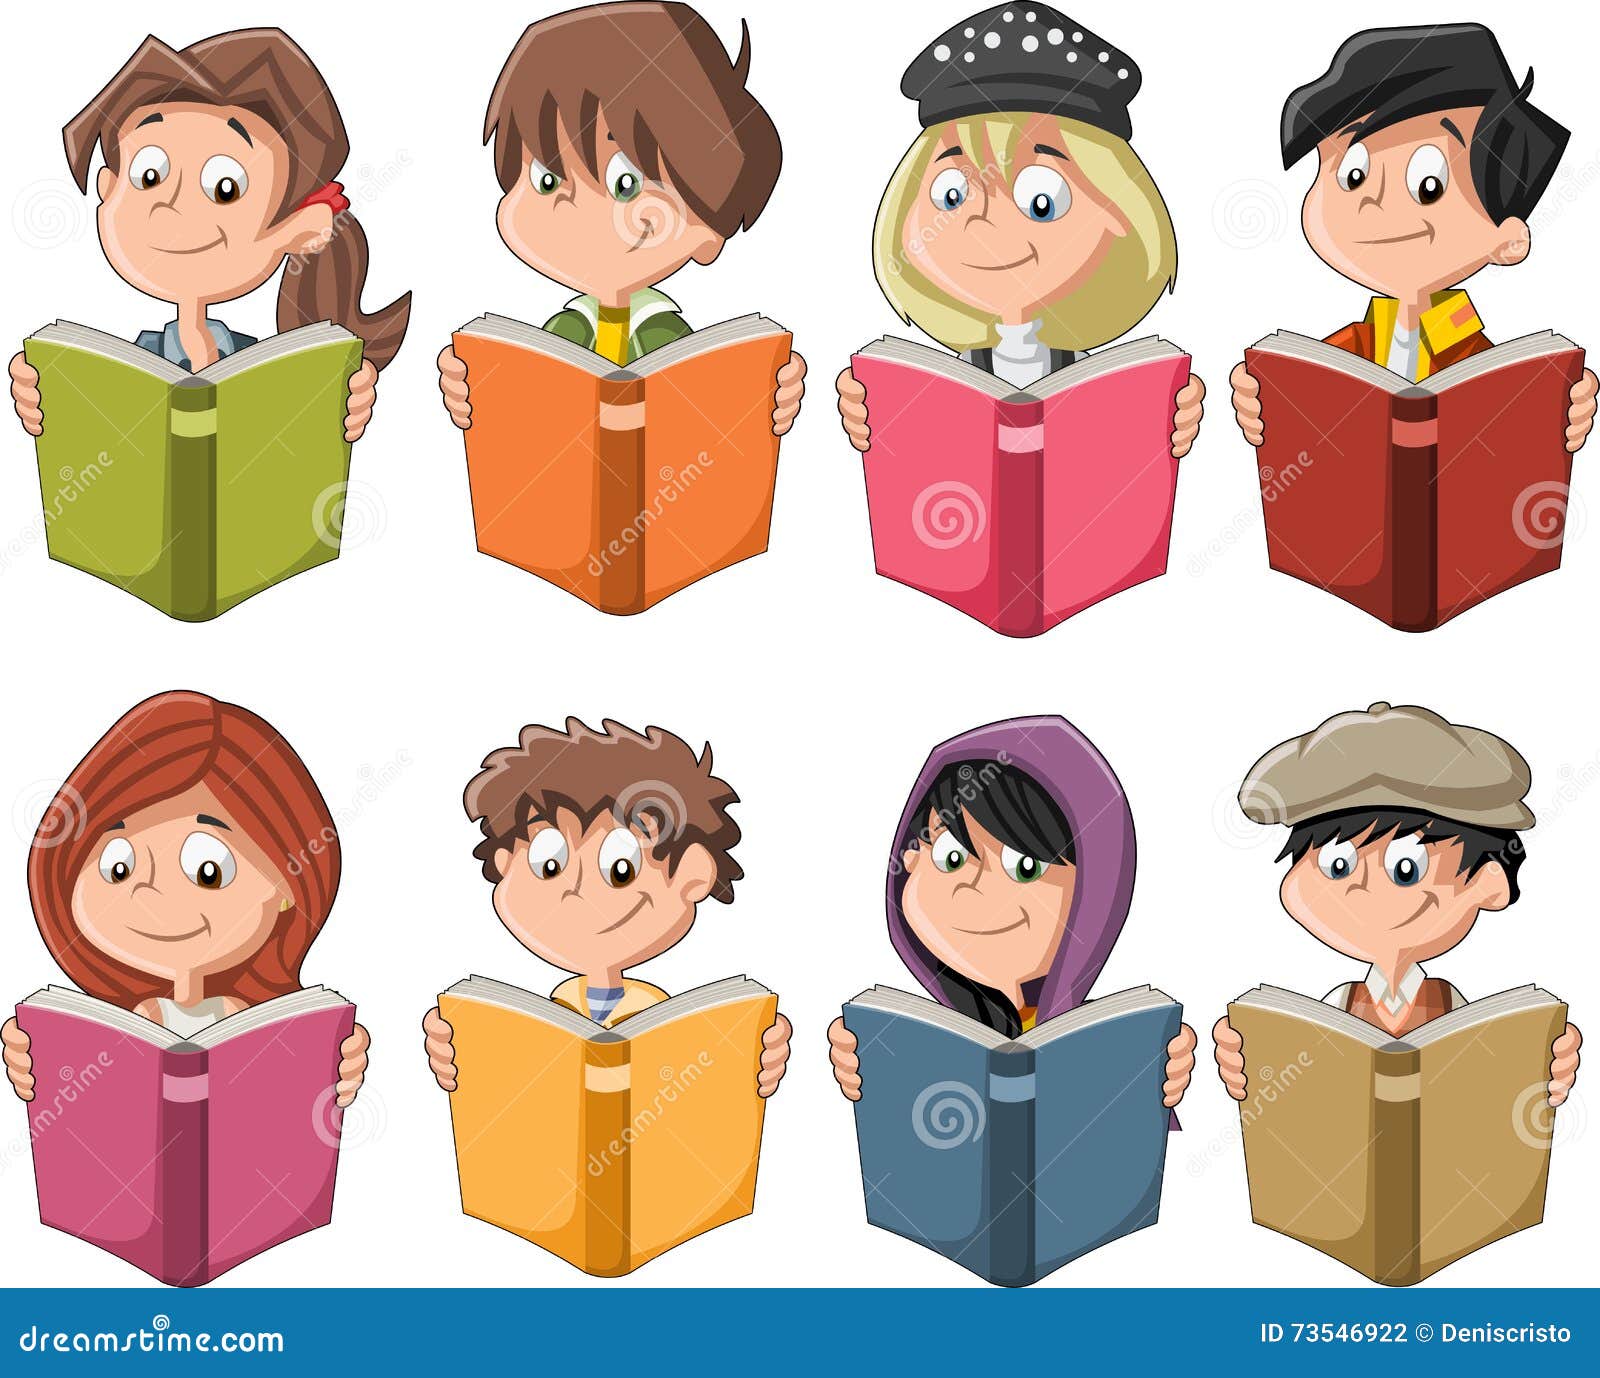 Cute Cartoon Children Reading Books. Stock Vector - Illustration of teen,  comic: 73546922